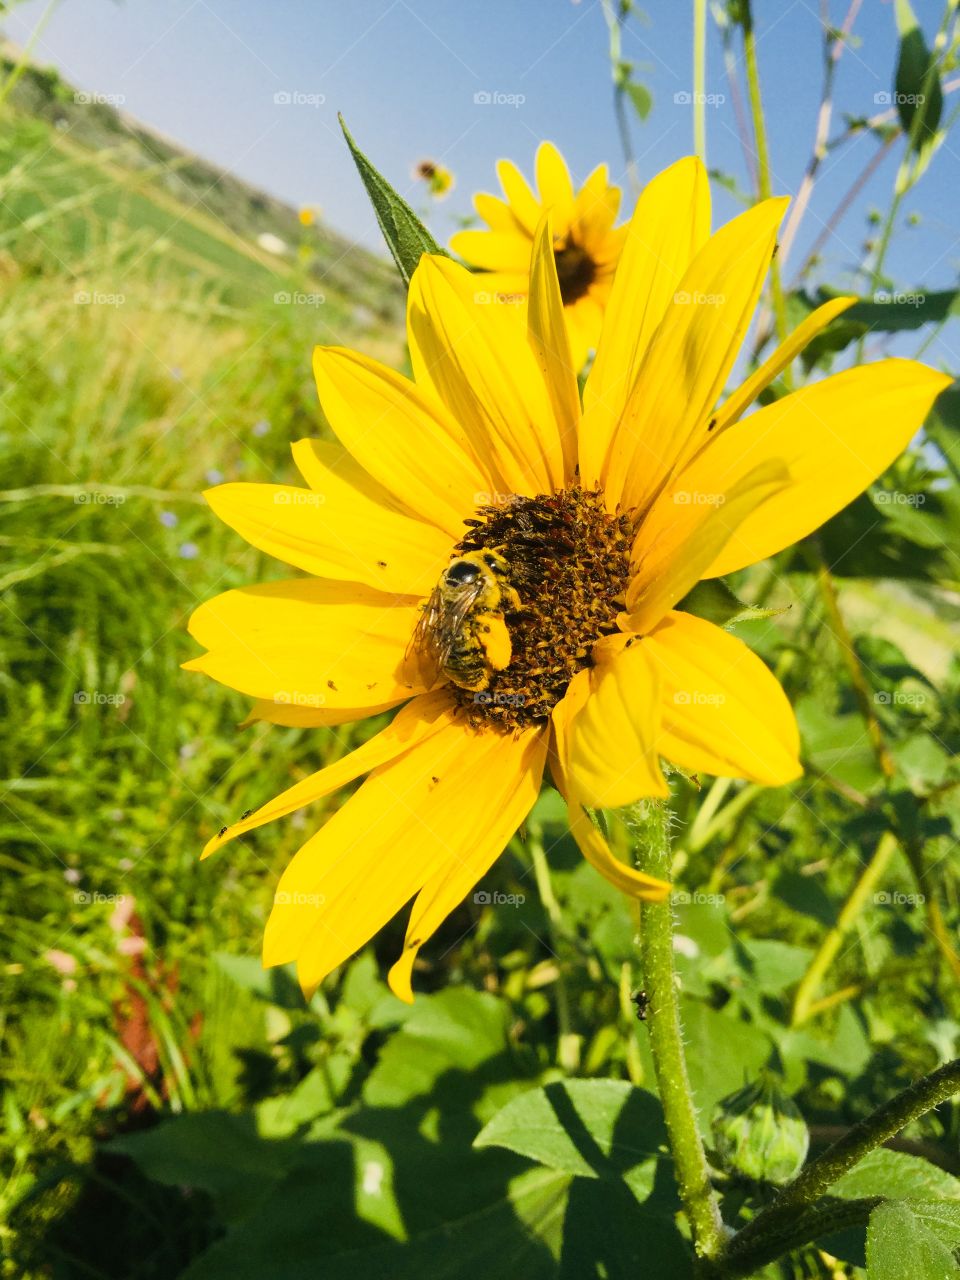 Bug and sunflower